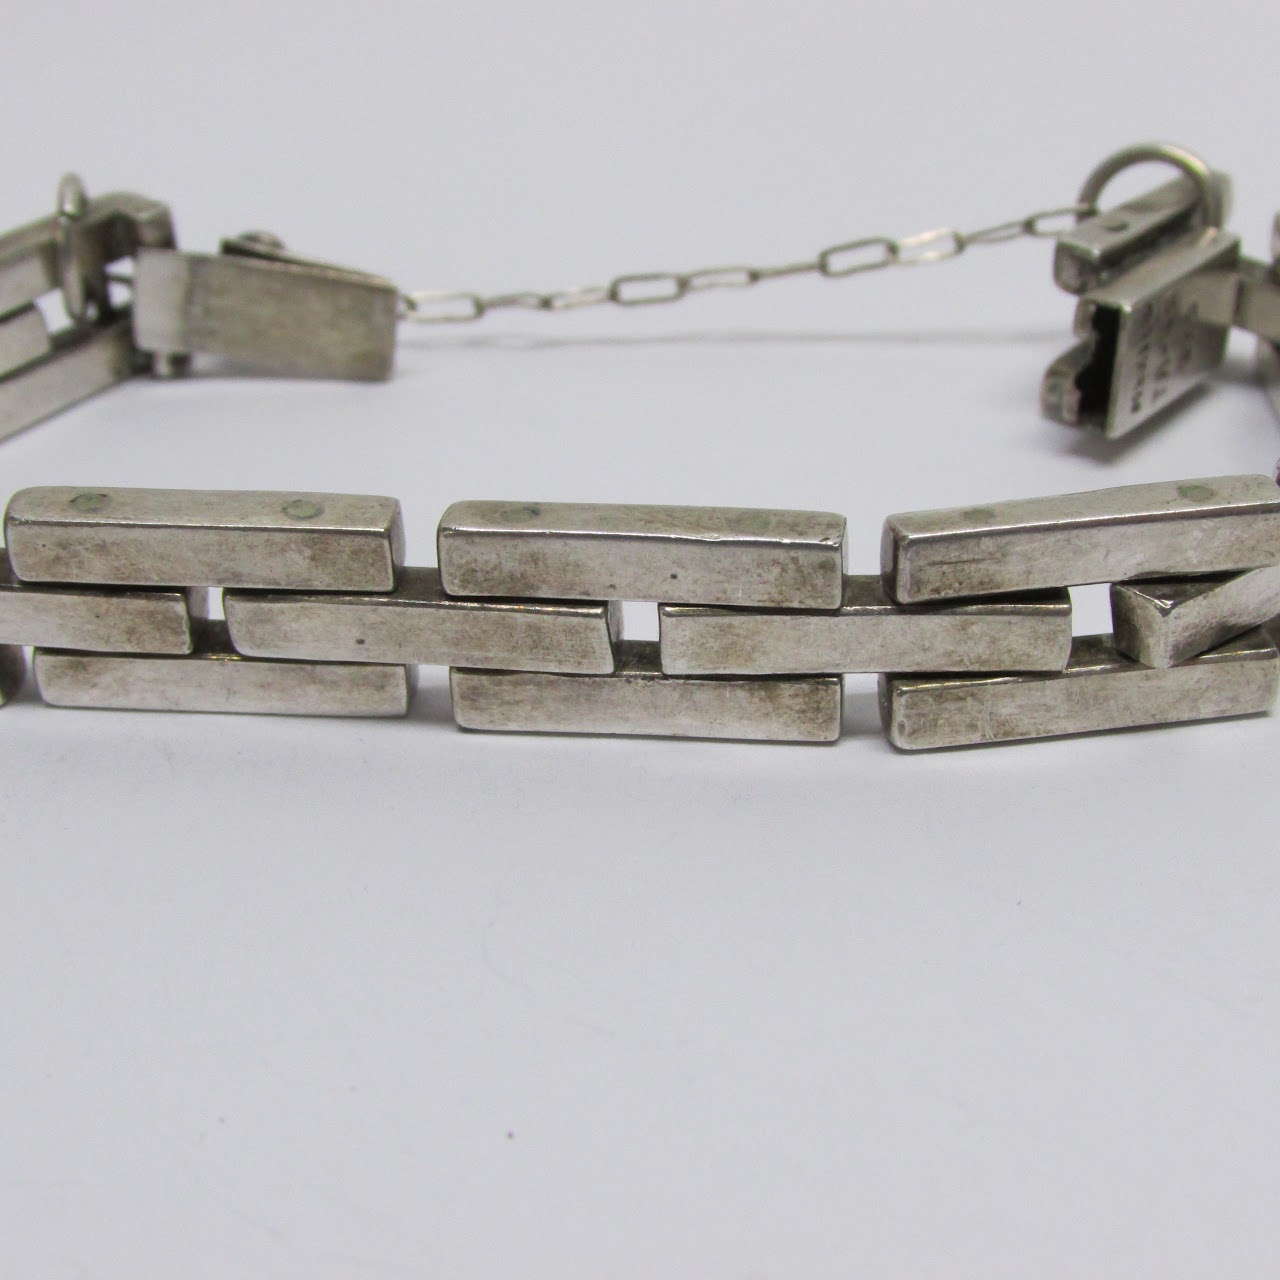 Taxco Sterling Silver Interlocking Link Bracelet